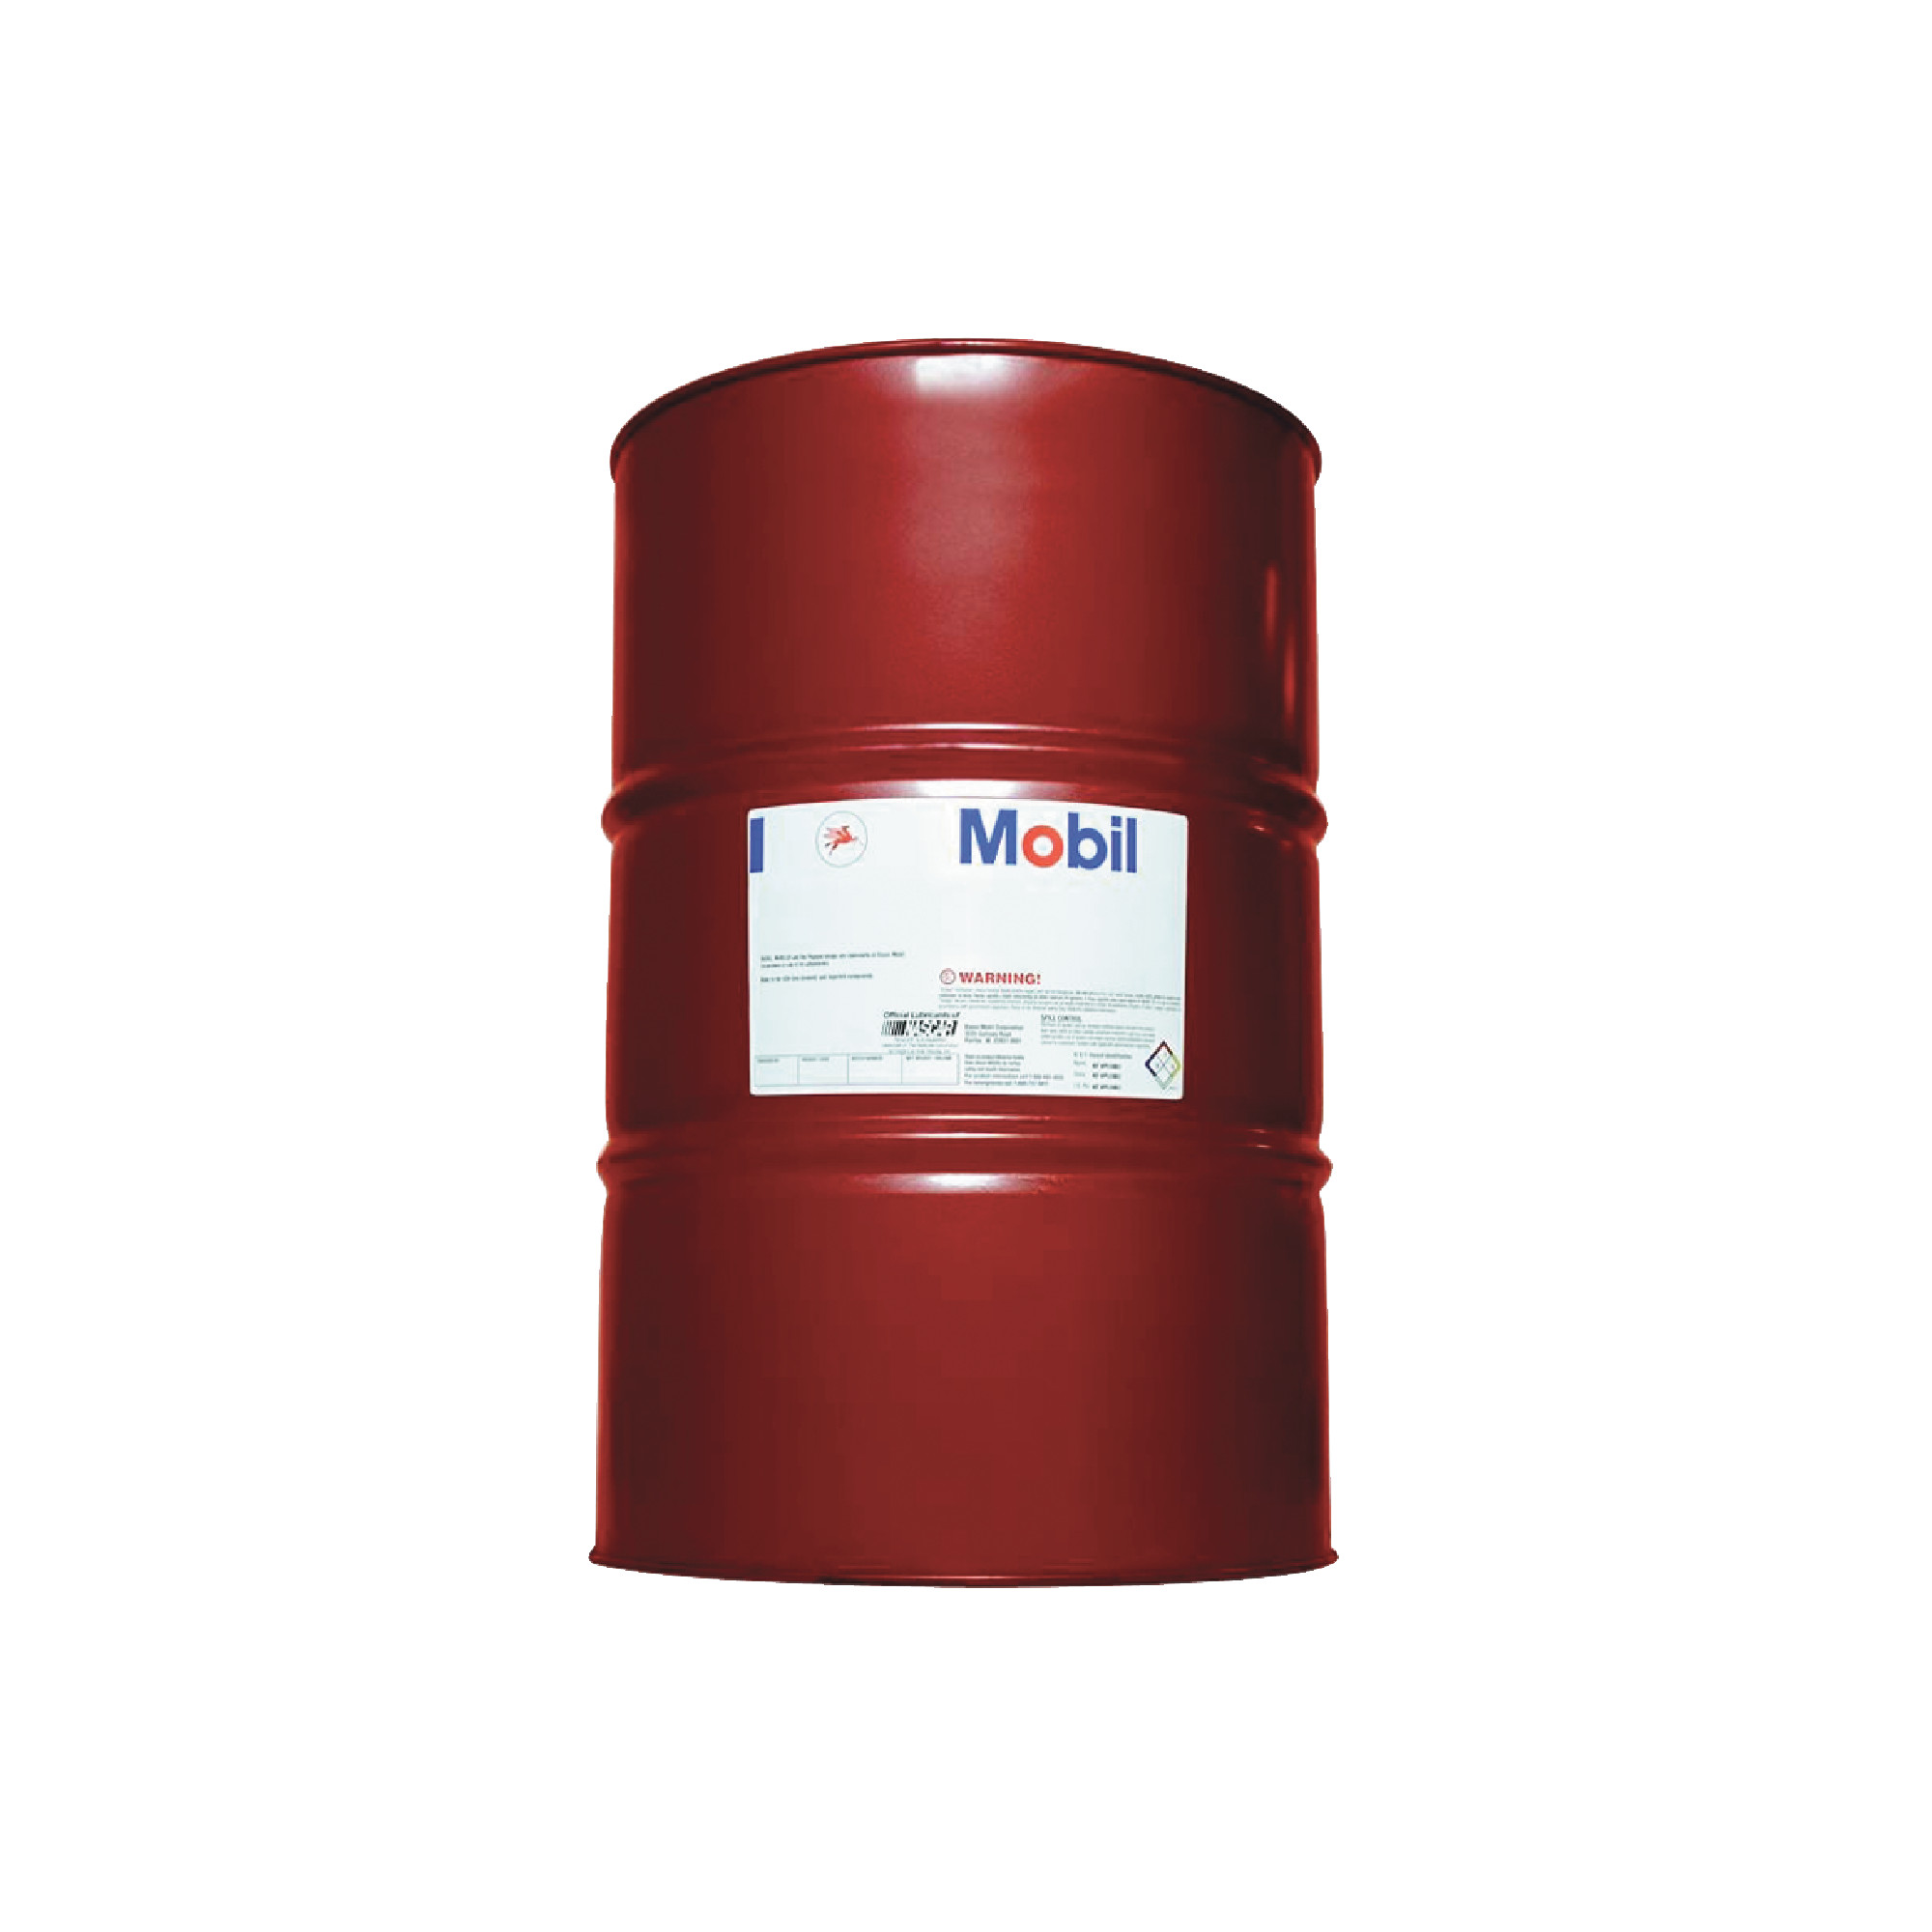 MOBIL DTE 25 55 Gallon Drum Hydraulic Fluid